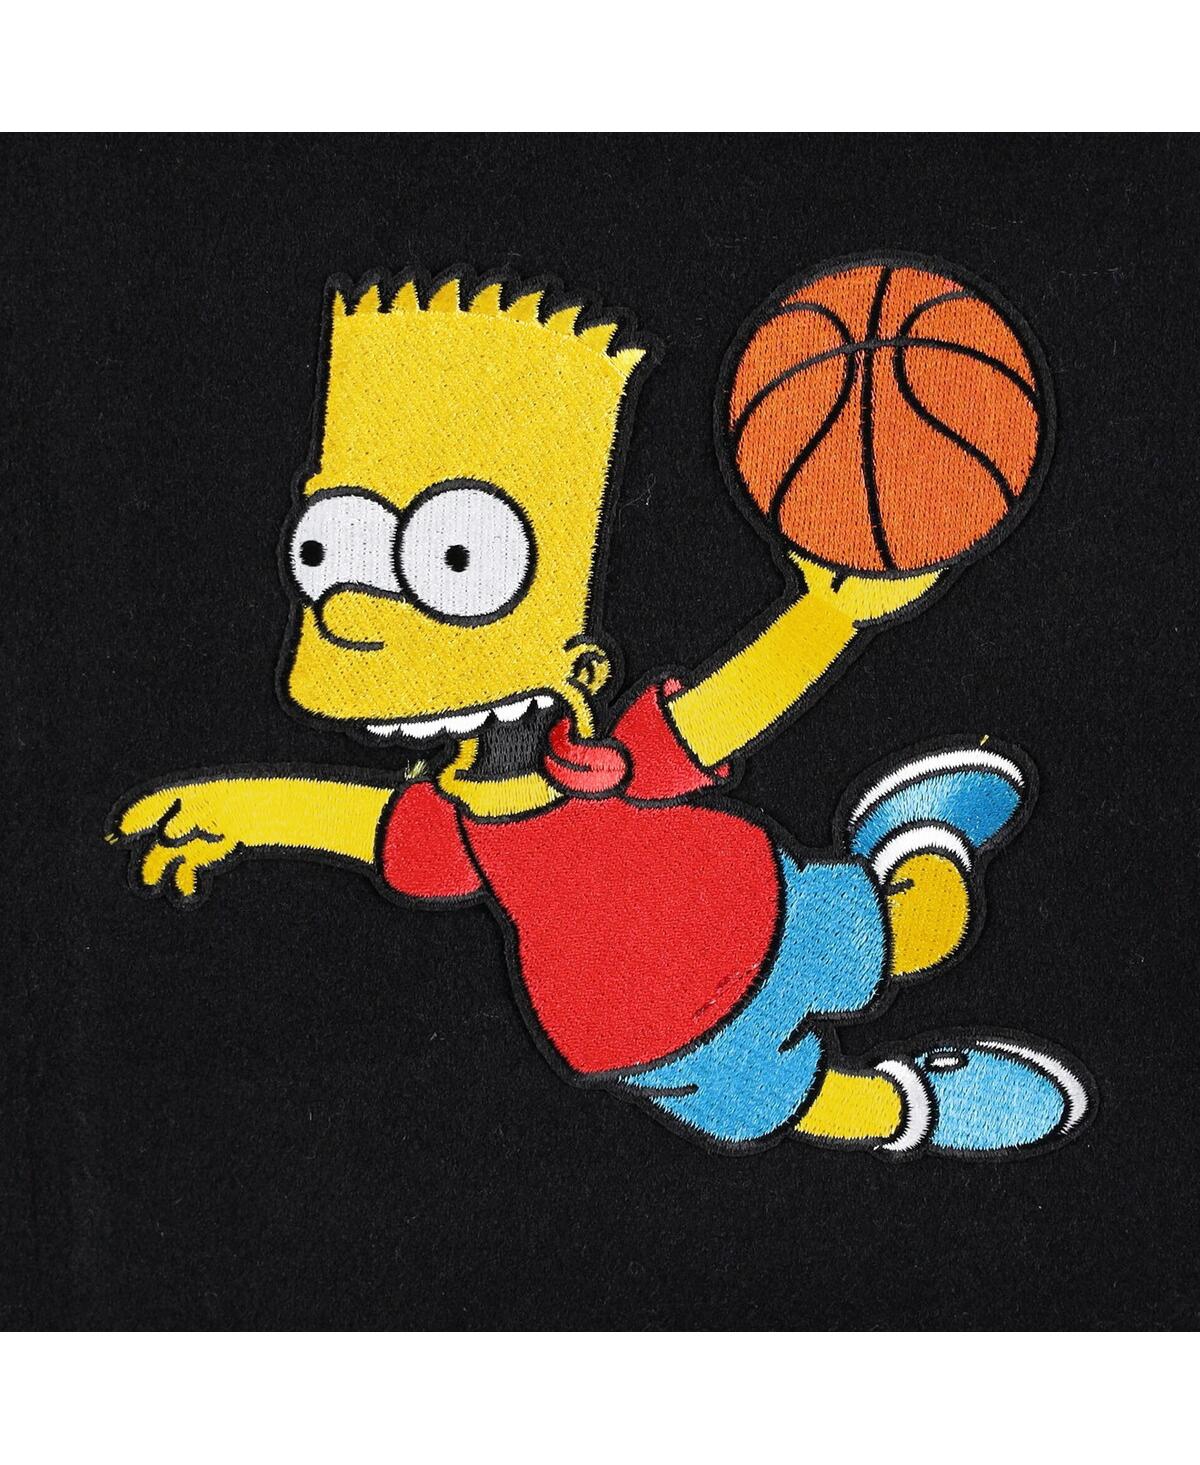 Shop Freeze Max Men's  Black The Simpsons Basketball Full-zip Varsity Jacket